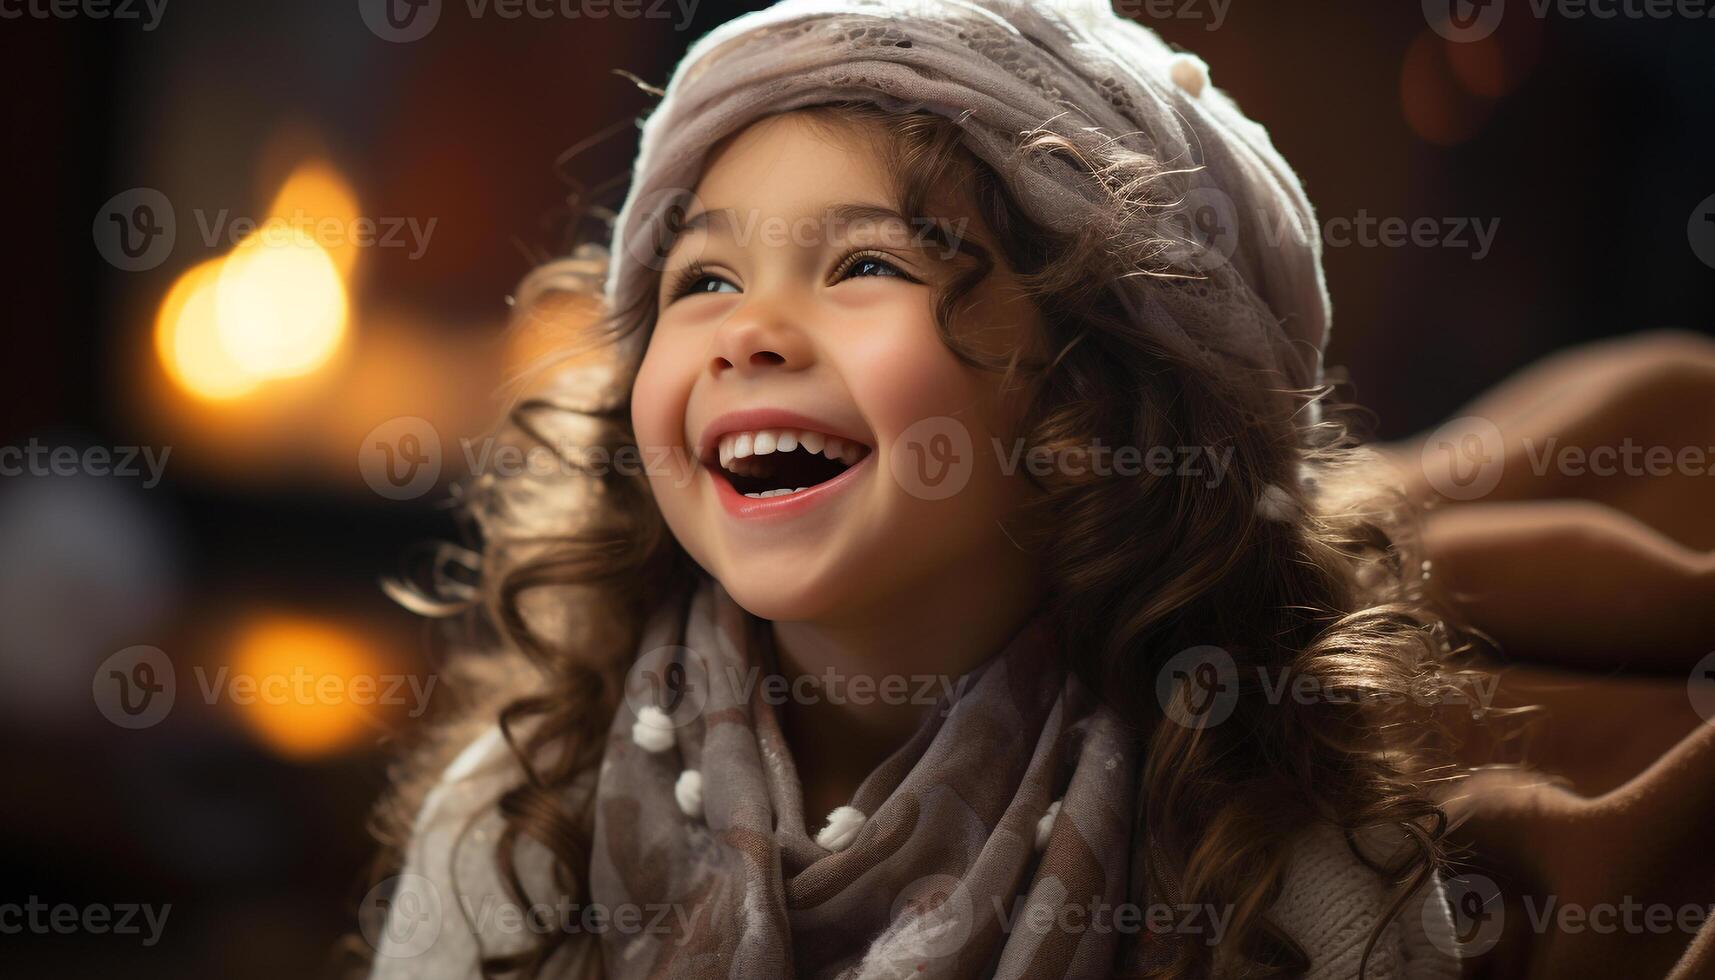 AI generated A cute, cheerful girl laughing, enjoying winter joyful celebration generated by AI photo